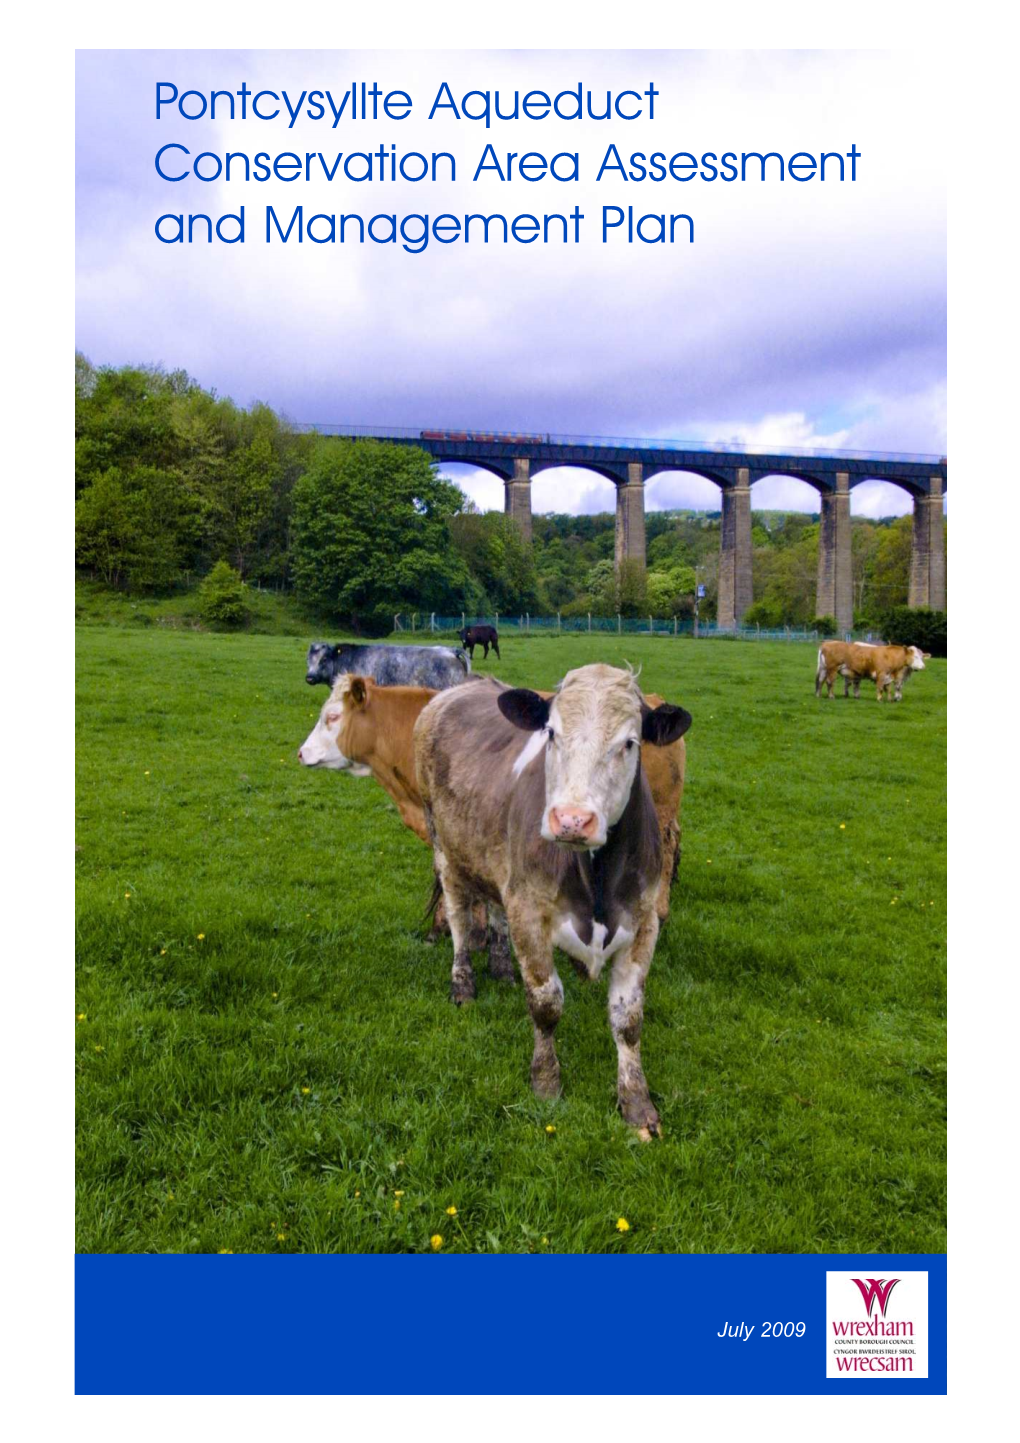 Pontcysyllte Aqueduct Conservation Area Assessment and Management Plan